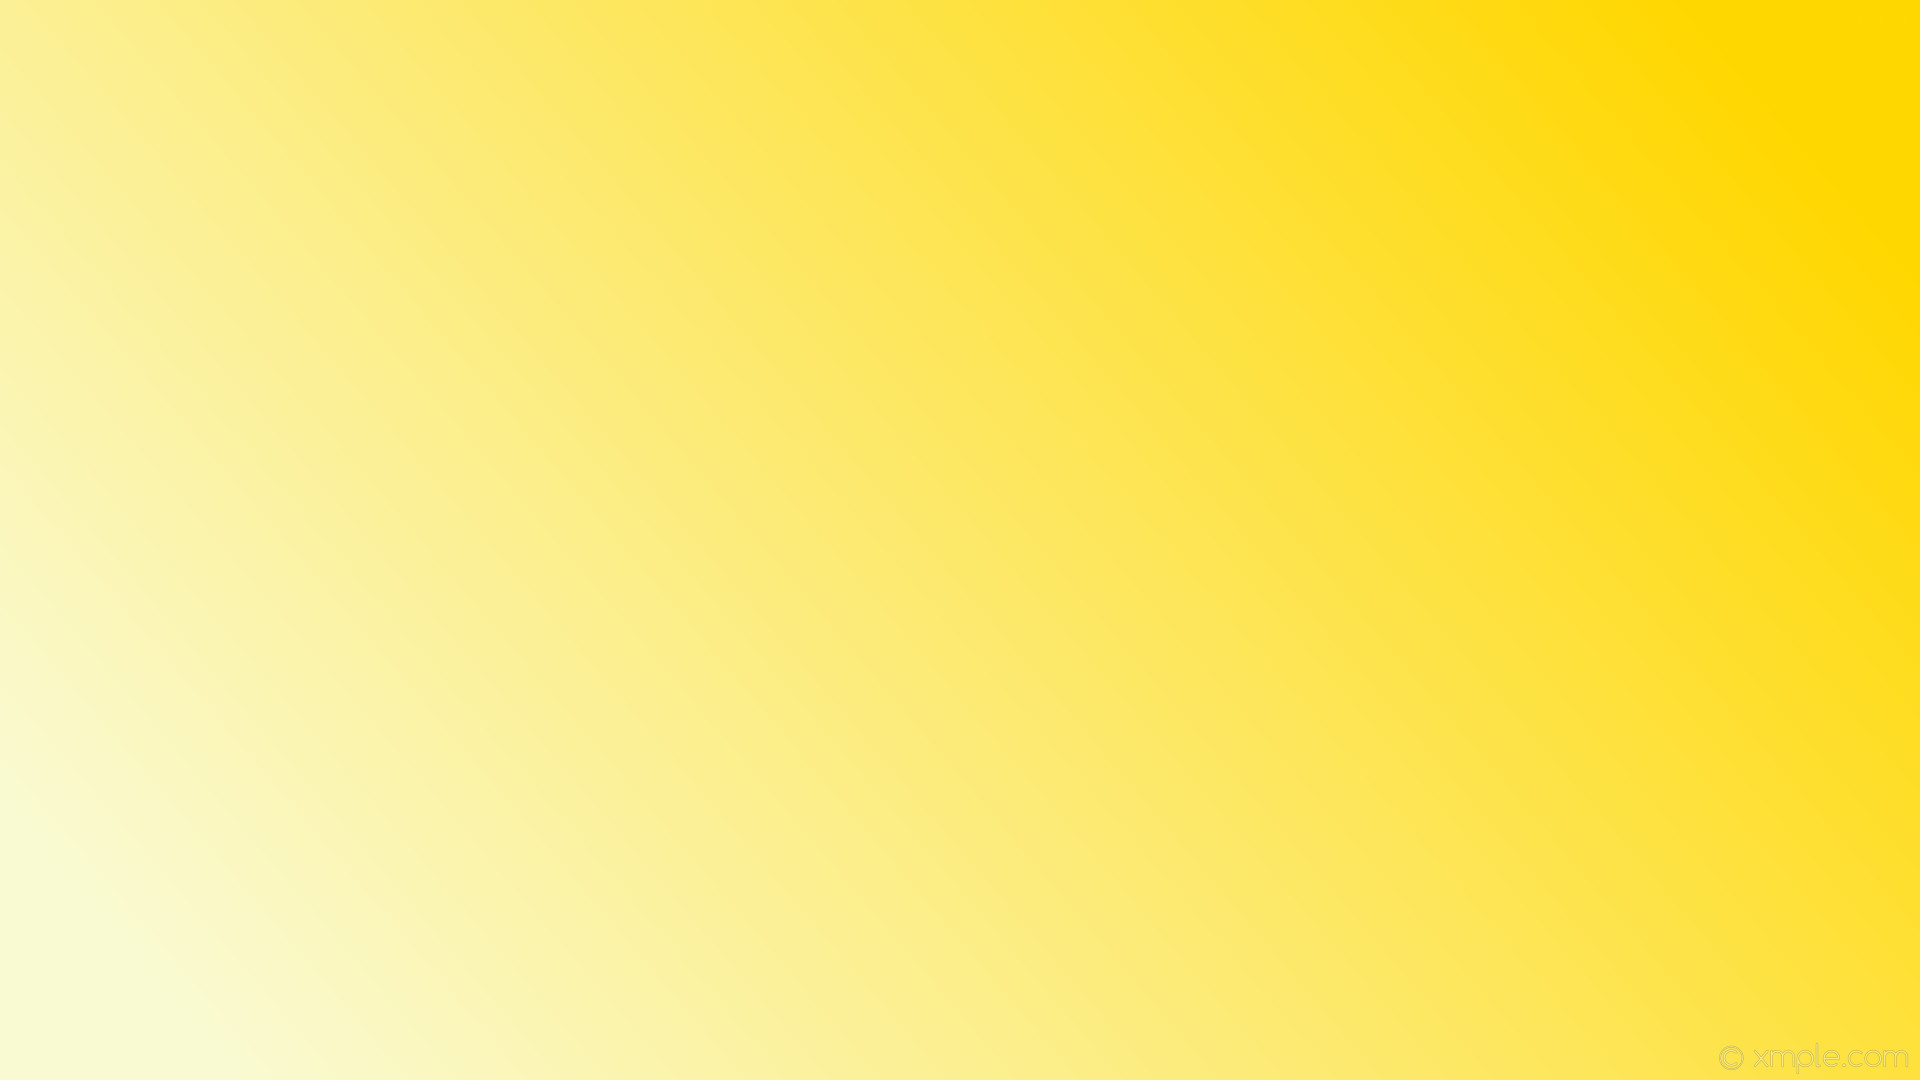 1920x1080 wallpaper gradient yellow linear gold light goldenrod yellow #ffd700  #fafad2 15Â°